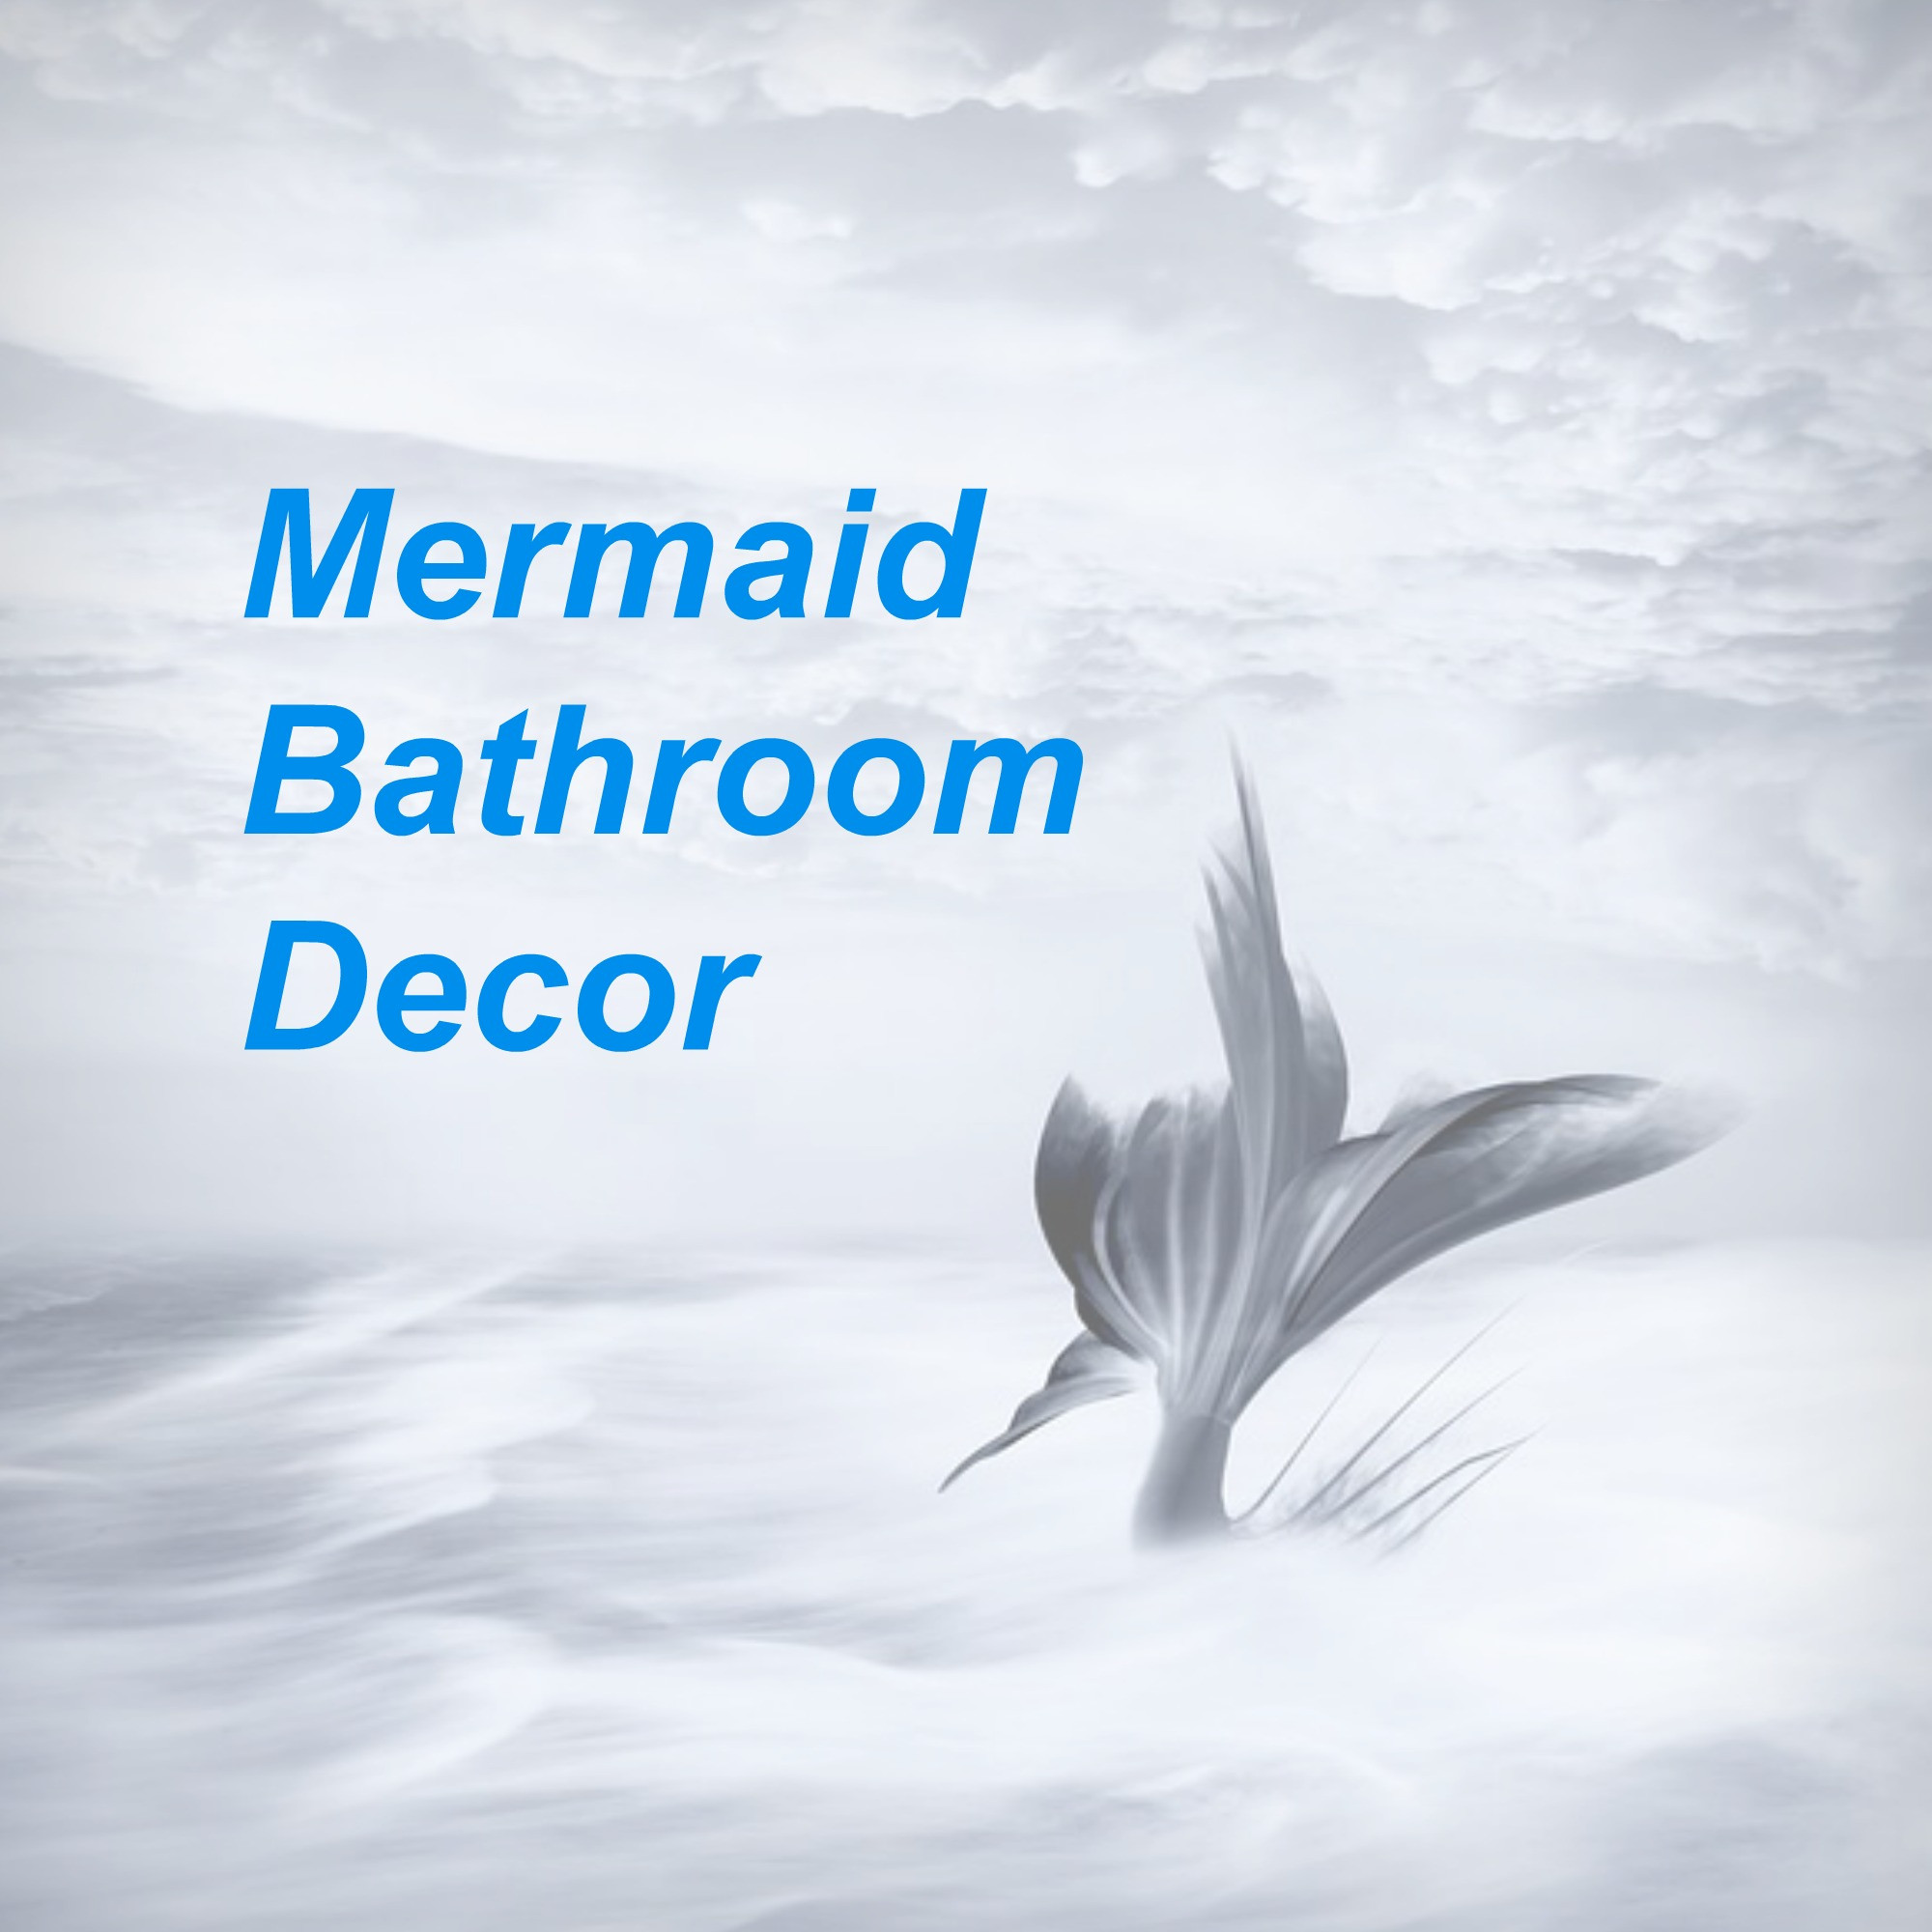 Mermaid Bathroom Decor
 Mermaid Bathroom Decor We Love